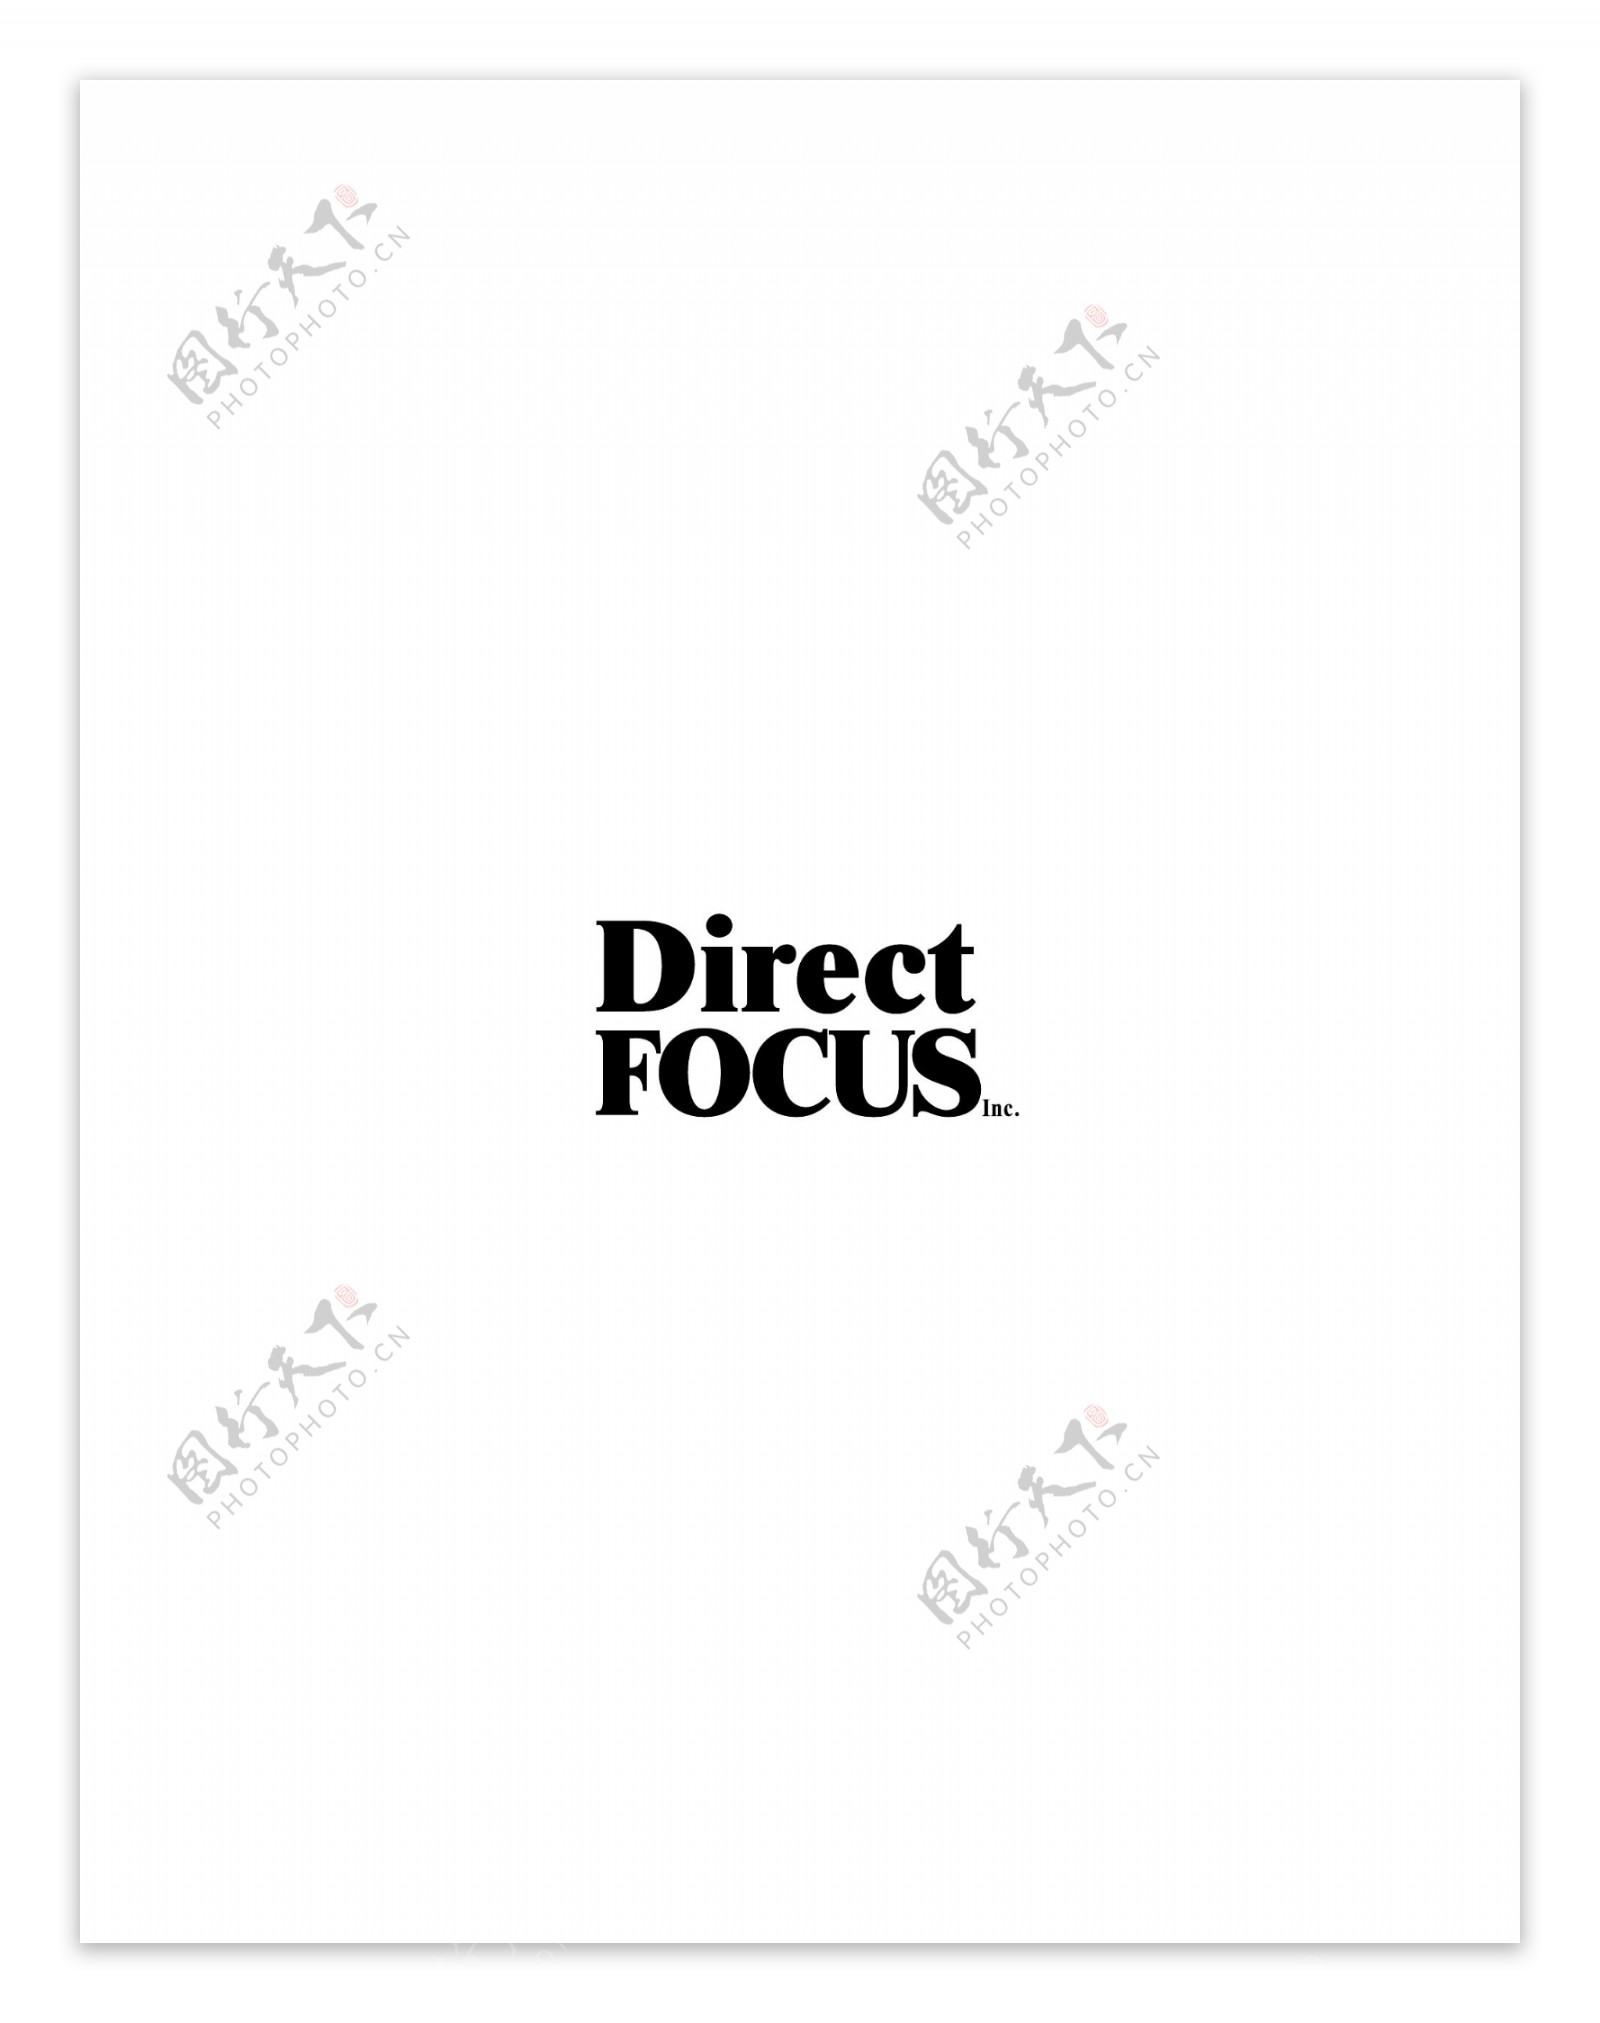 DirectFocuslogo设计欣赏网站标志欣赏DirectFocus下载标志设计欣赏